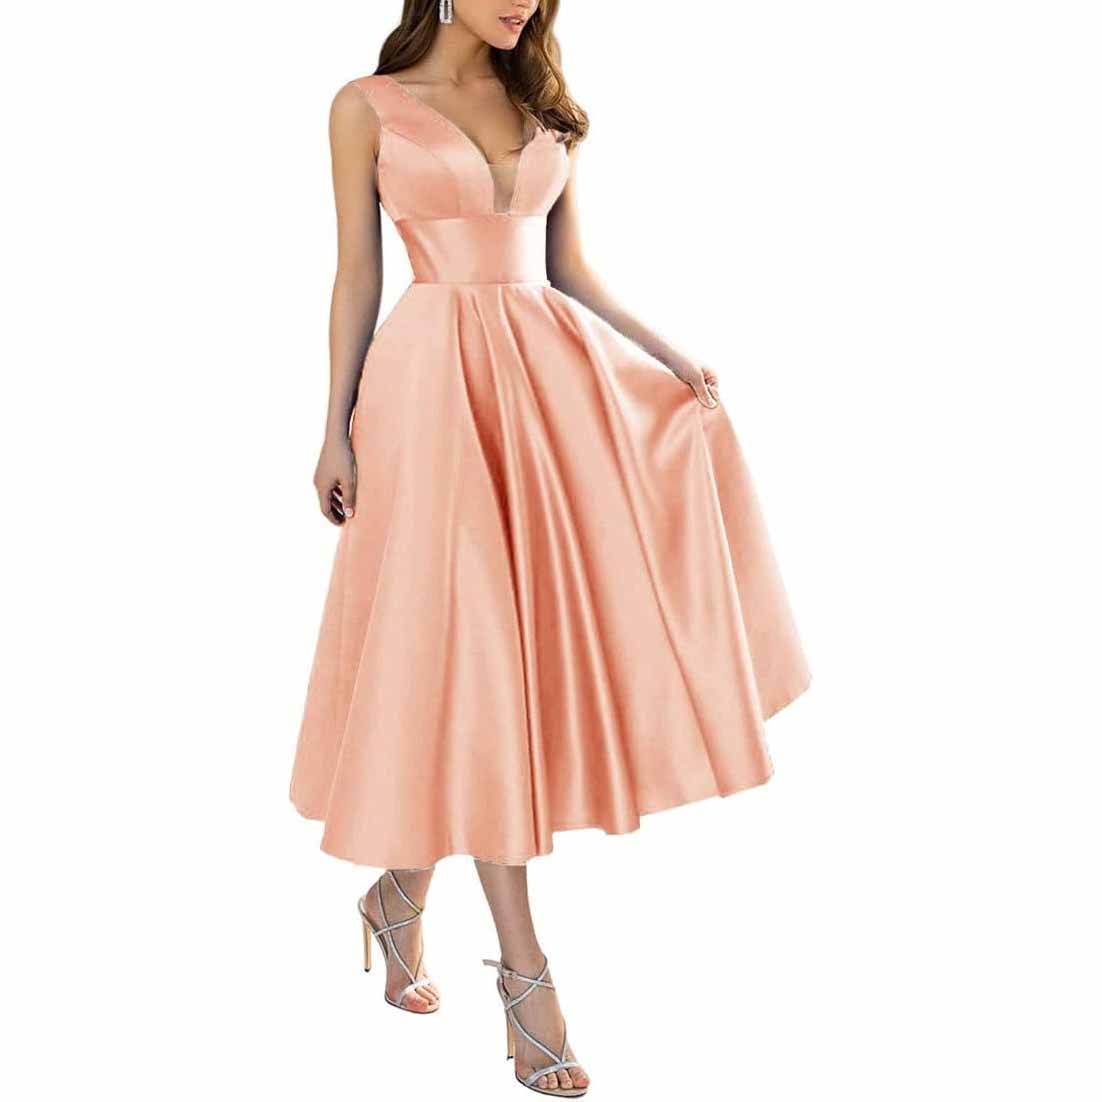 Women's Satin Bridesmaid Dresses A-line Tea Length Formal Evening Dress with Pockets